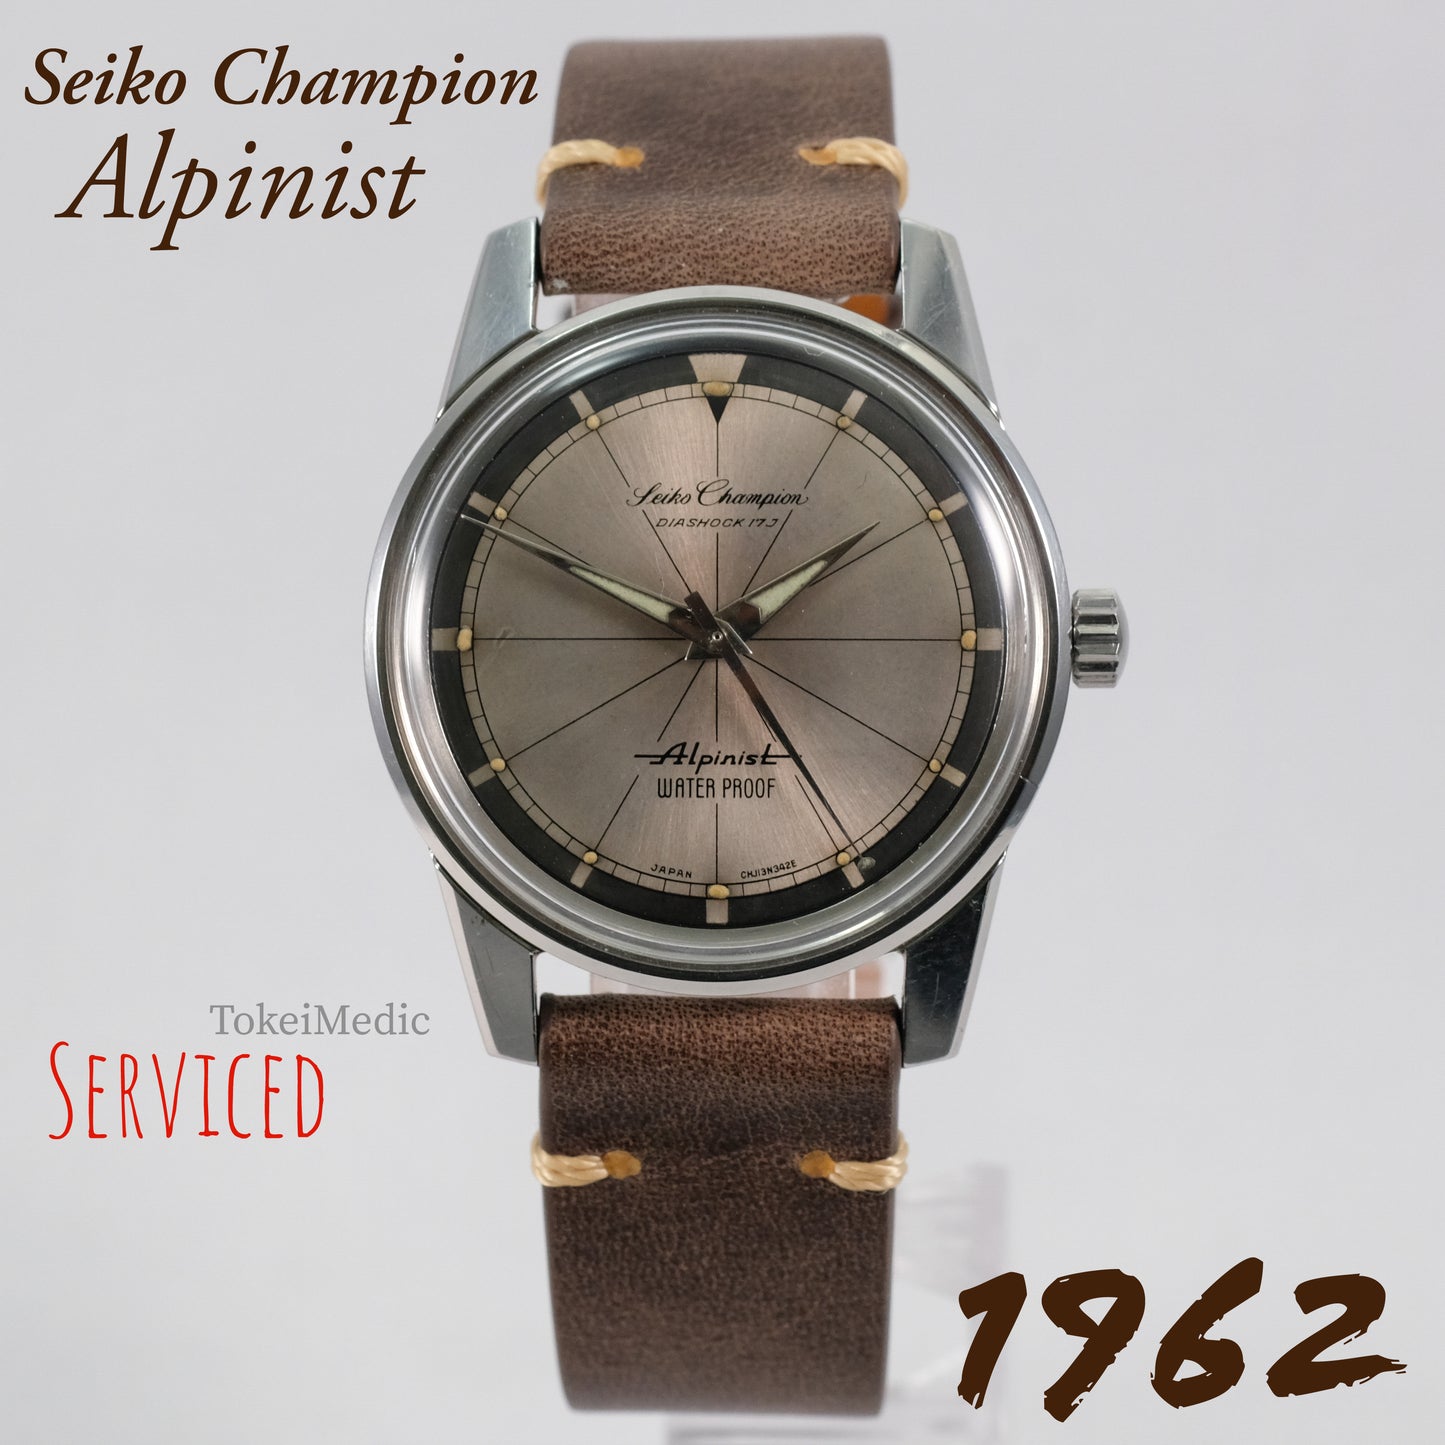 1962 Seiko Champion Alpinist J13049